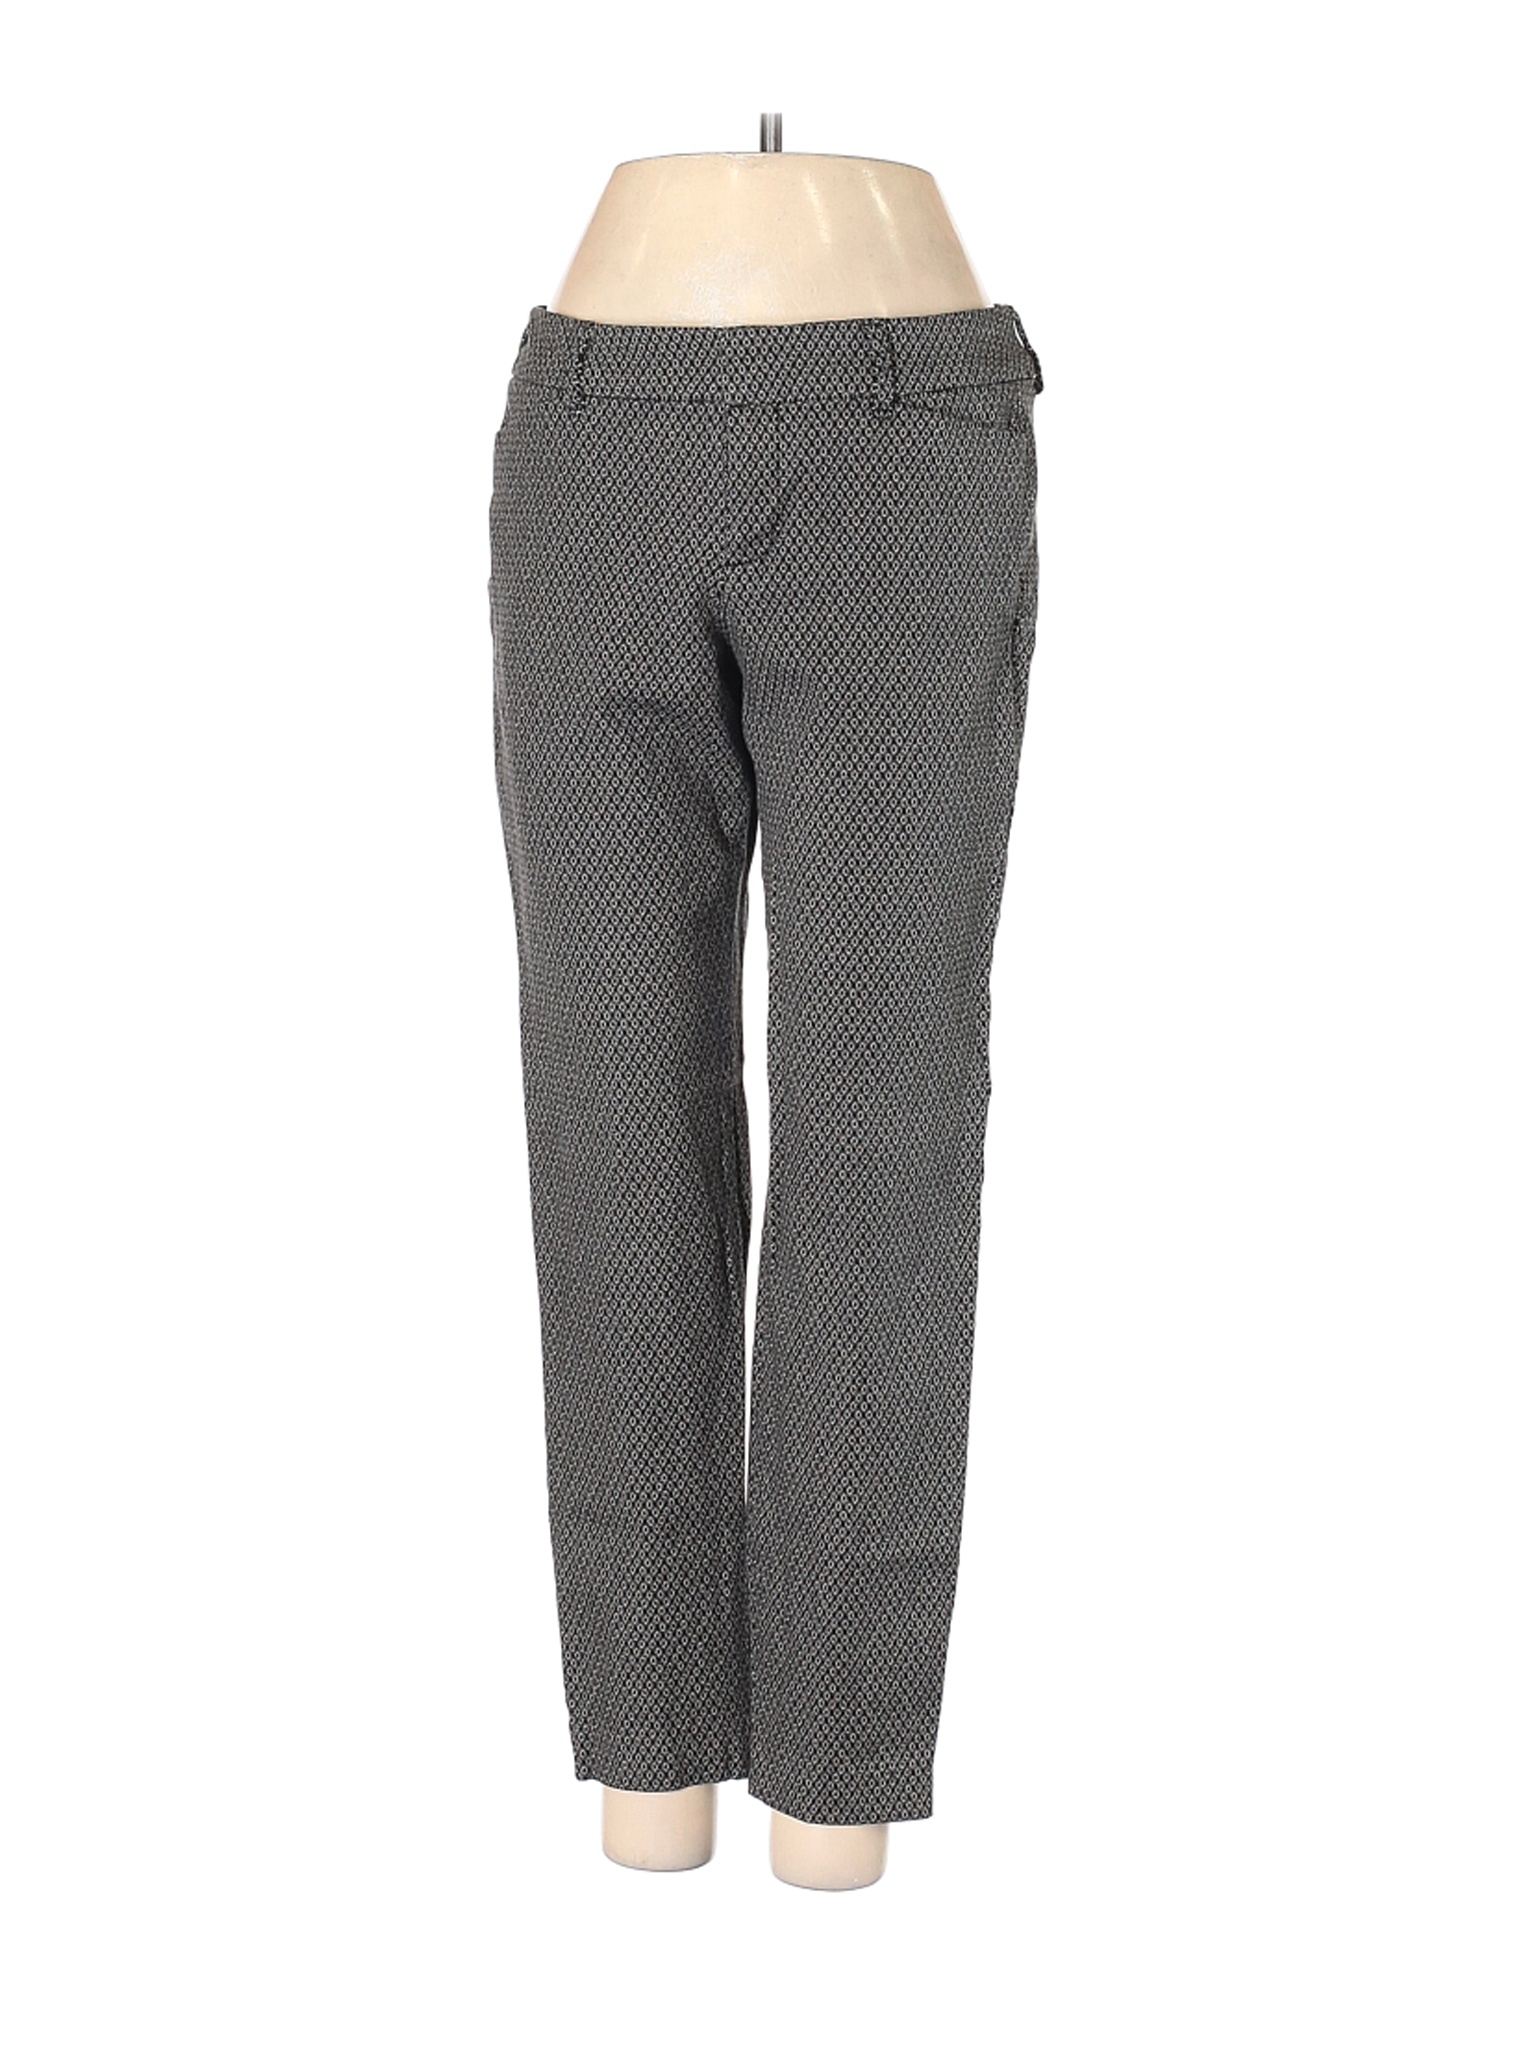 Old Navy Women Gray Dress Pants 4 | eBay